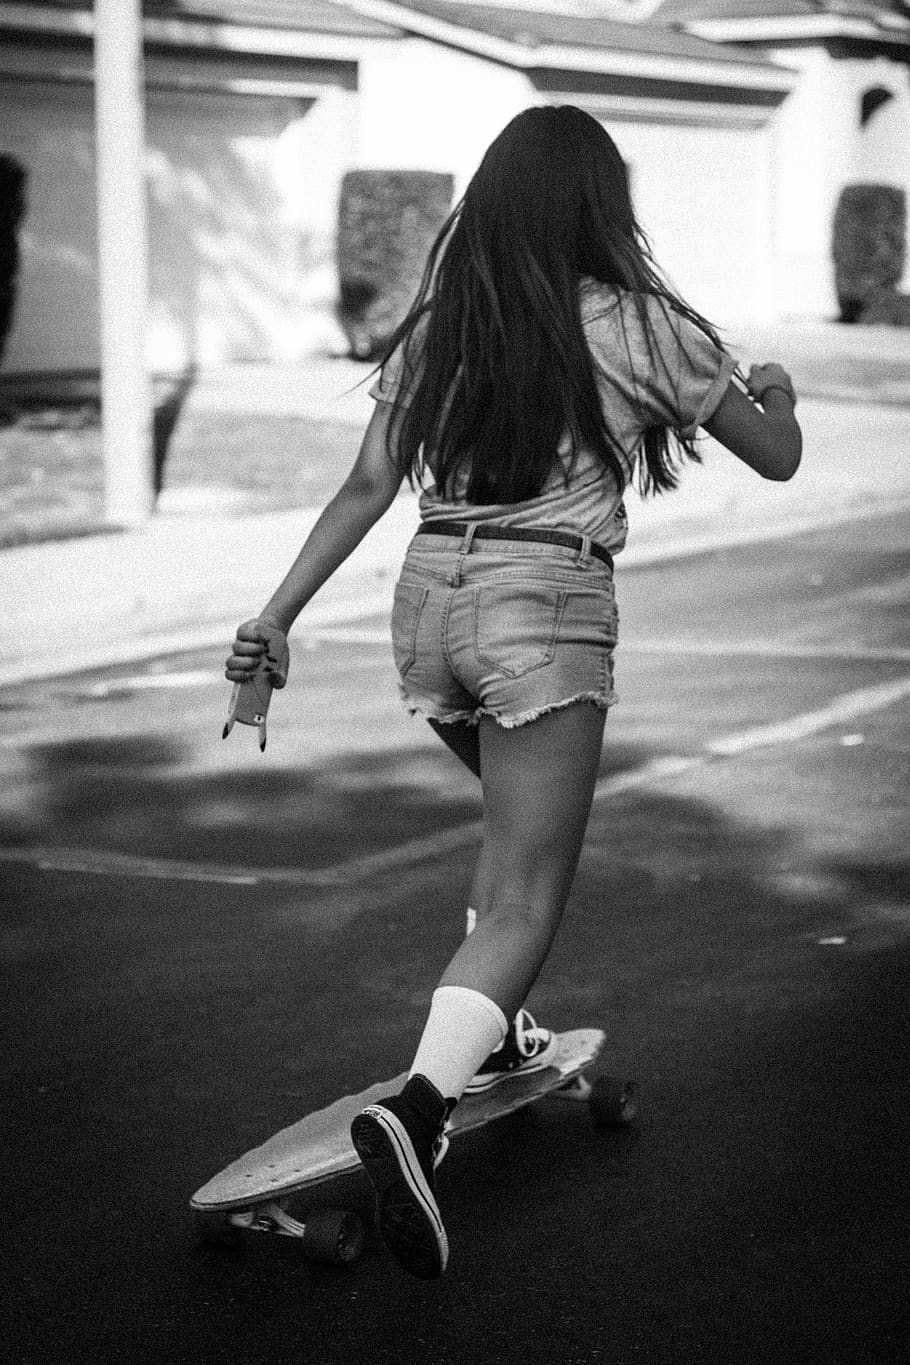 HD wallpaper: long board, girl, girl skater, skateboard, teenage dream, wanderlust